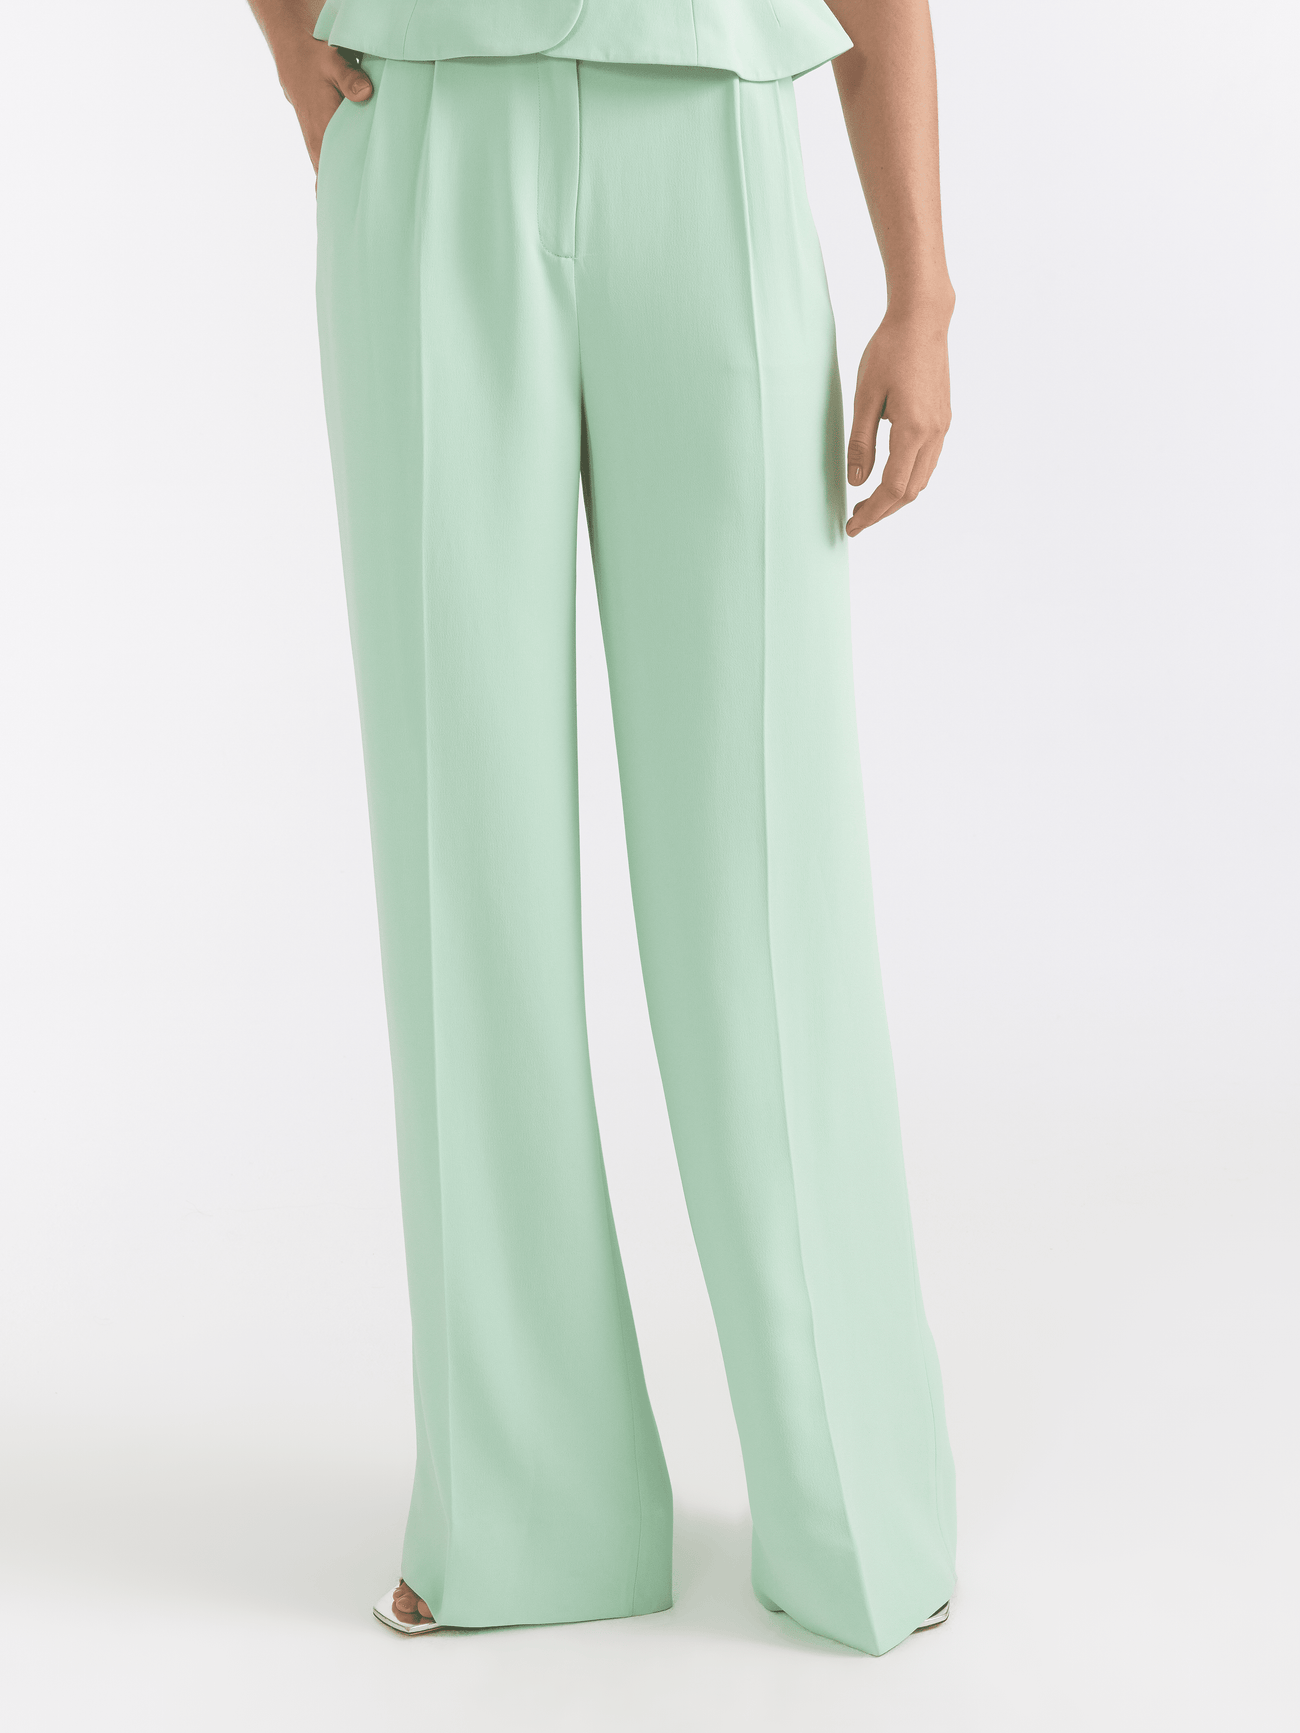 Sage Green elasticated waist trousers for elderly ladies. half